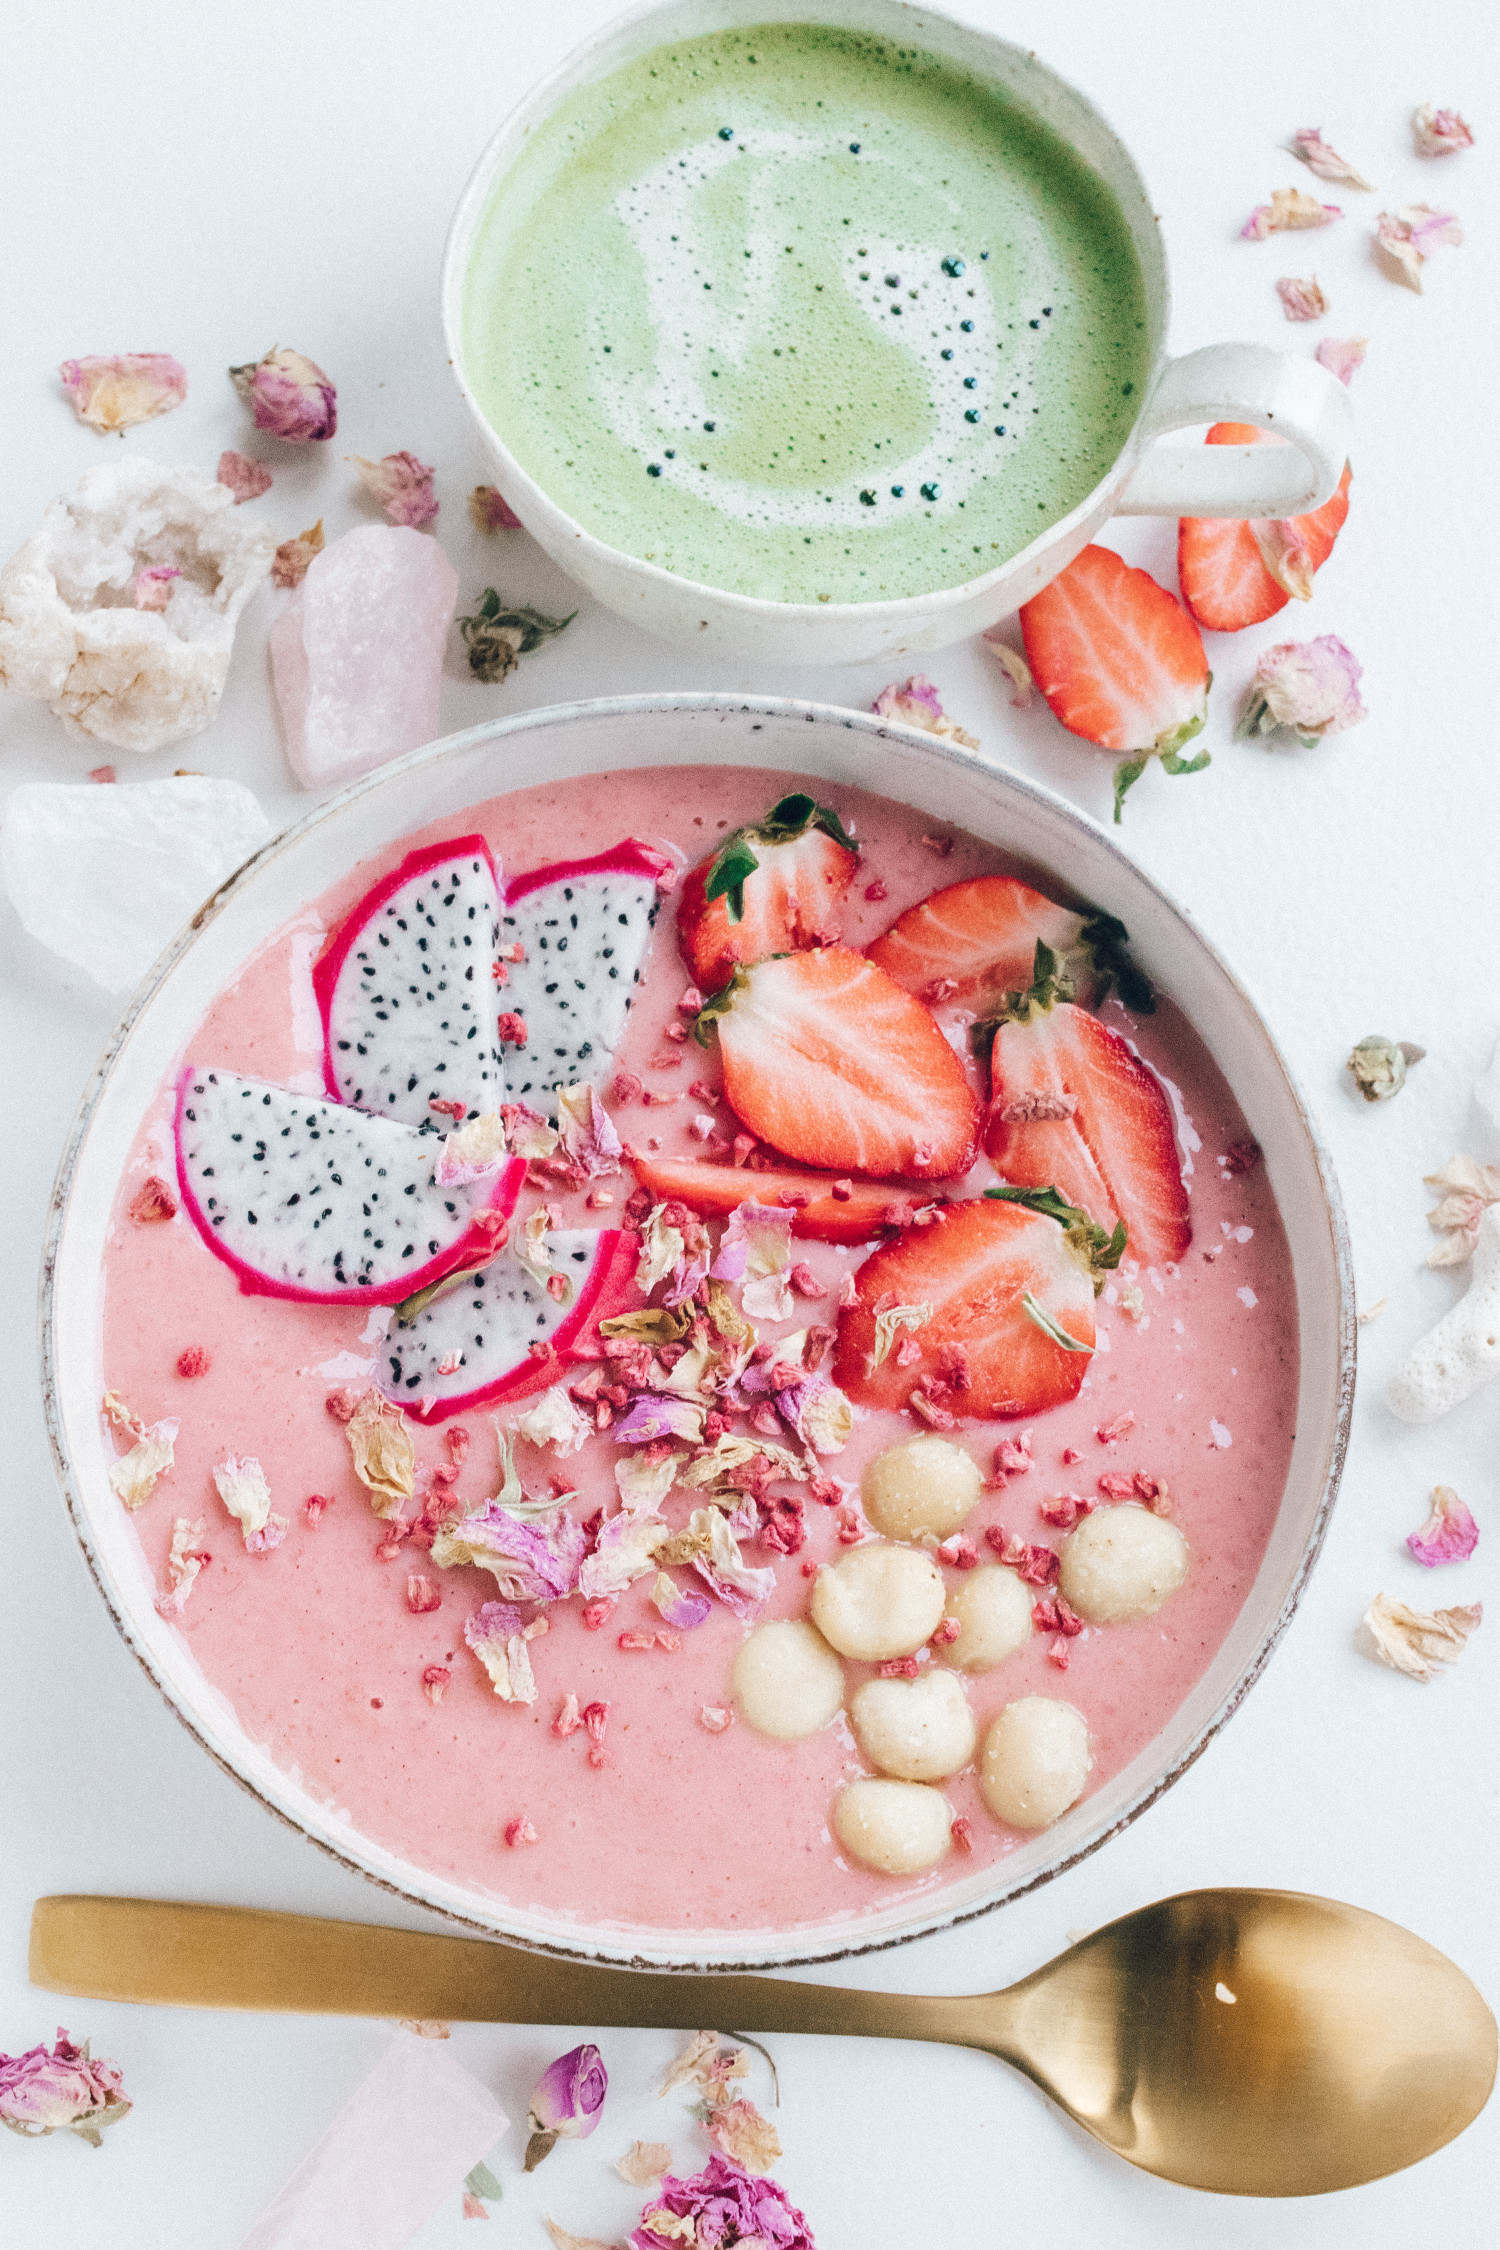 Strawberry-vanilla shake smoothie bowl and creamy matcha lattes